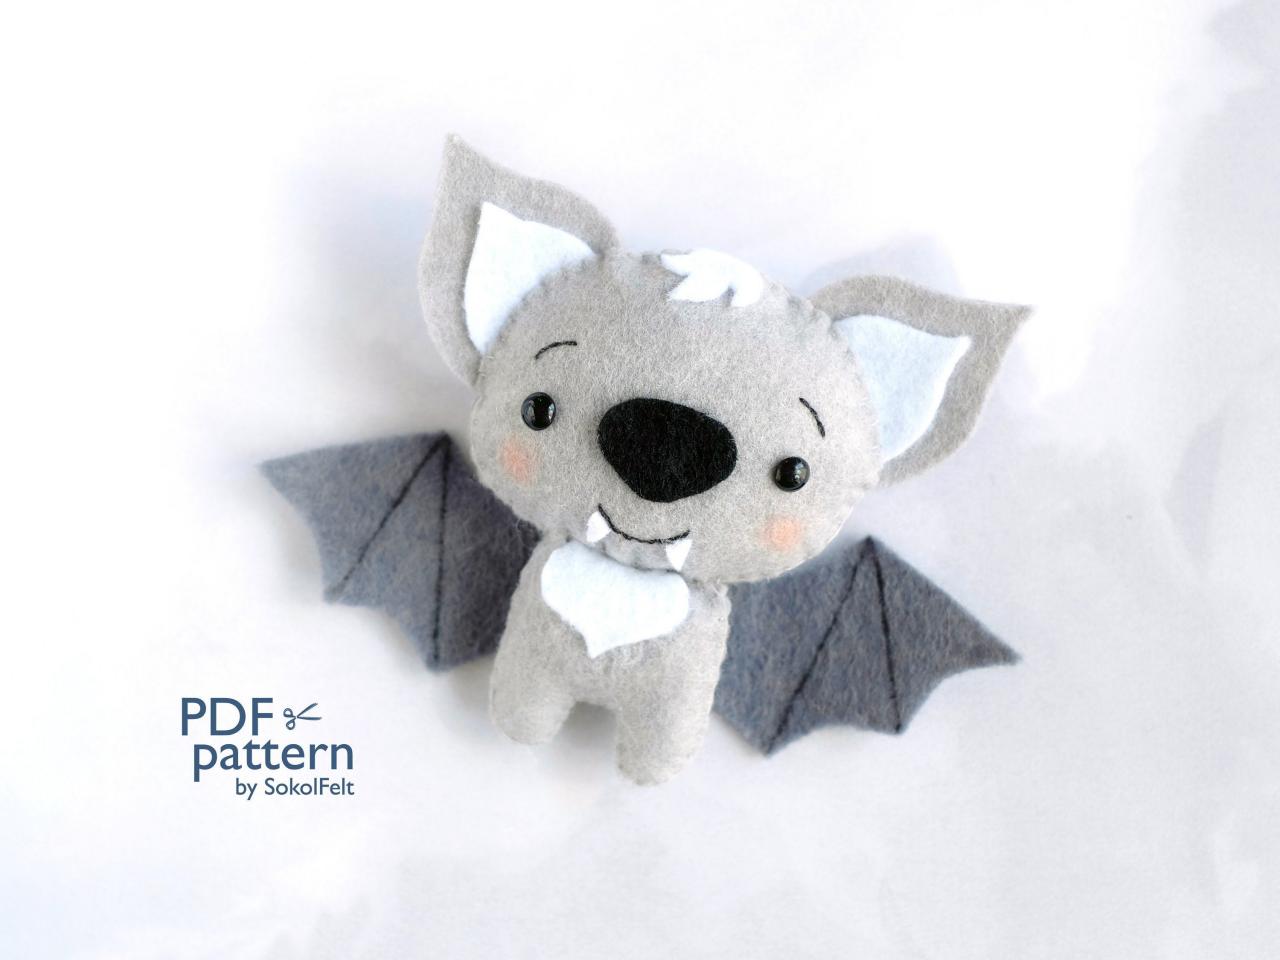 Felt Bat Toy Sewing Pdf Pattern, Diy Halloween Ornament, Felt Bat Tutorial, Felt Halloween Toy, Handmade Gift For Halloween, Vampire Pattern